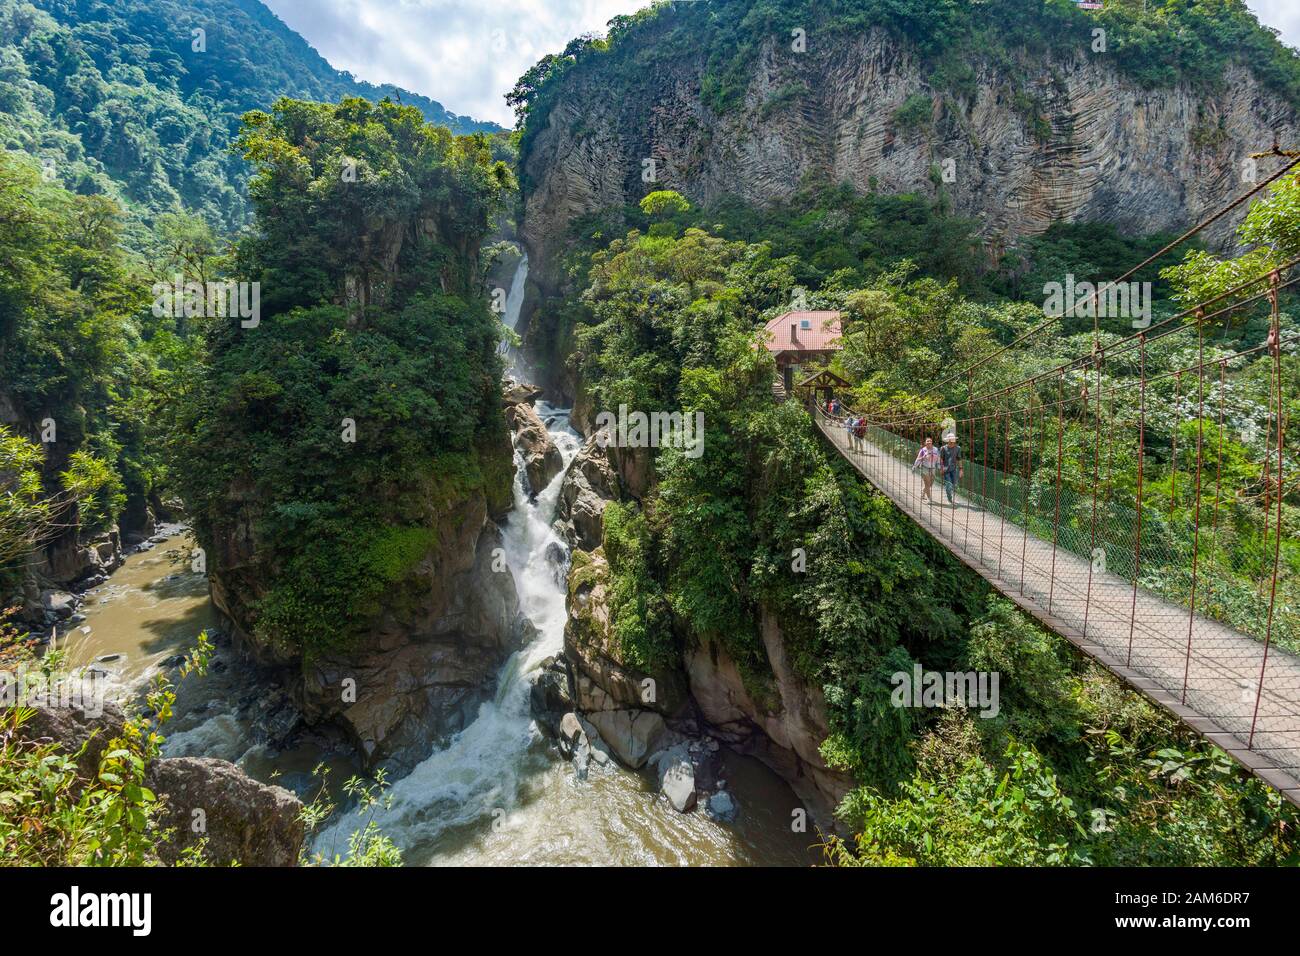 Cascata El Pailón del Diablo e ponte con turisti sul fiume Pastaza vicino a Baños in Ecuador. Foto Stock